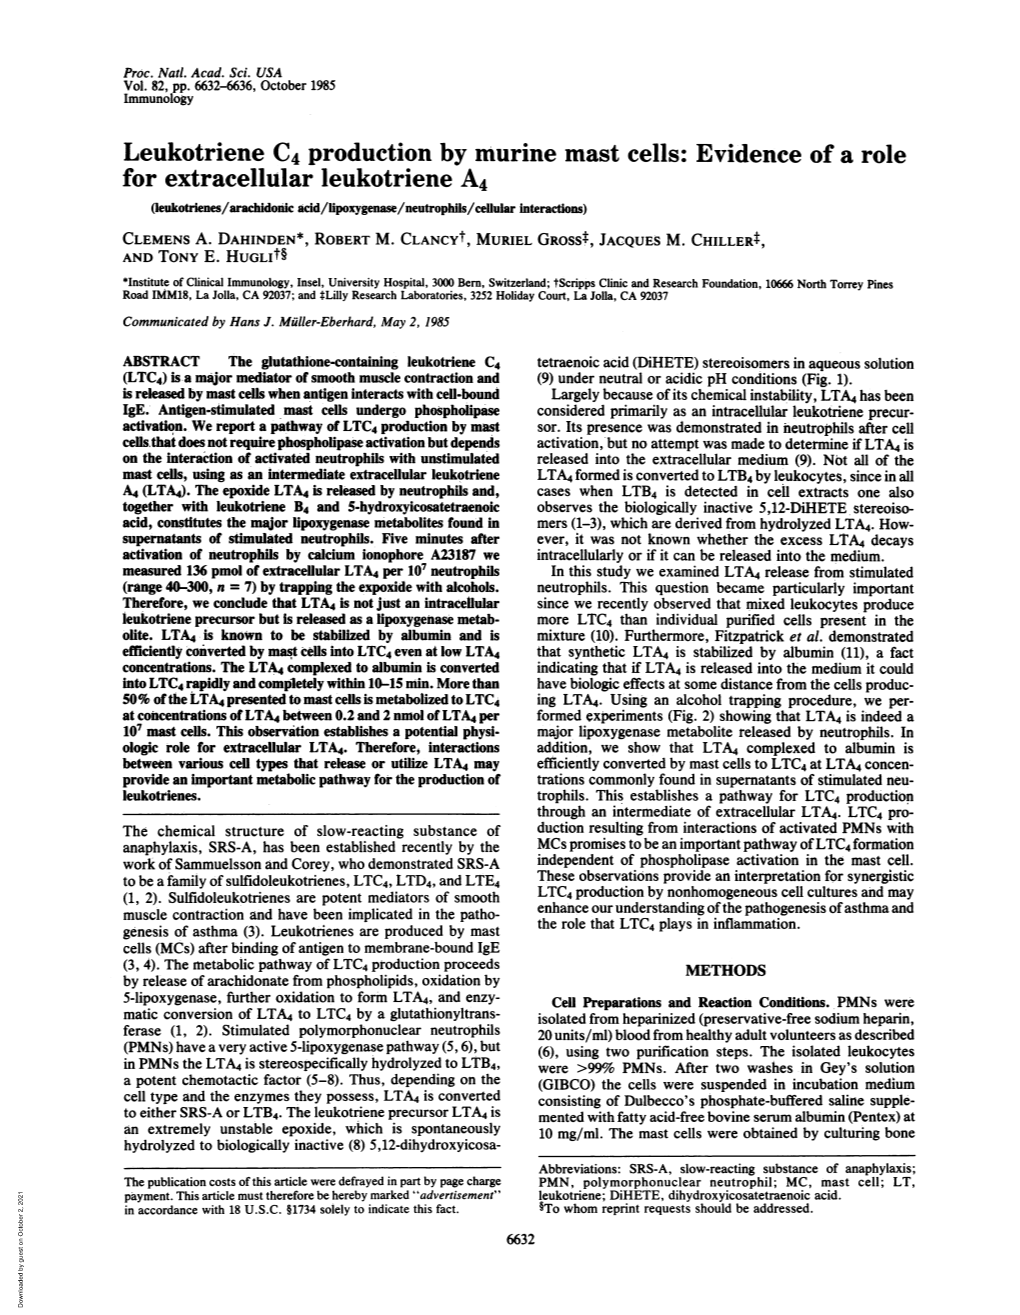 For Extracellular Leukotriene A4 (Leukotrienes/Arachidonic Acid/Lipoxygenase/Neutrophils/Cellular Interactions) CLEMENS A